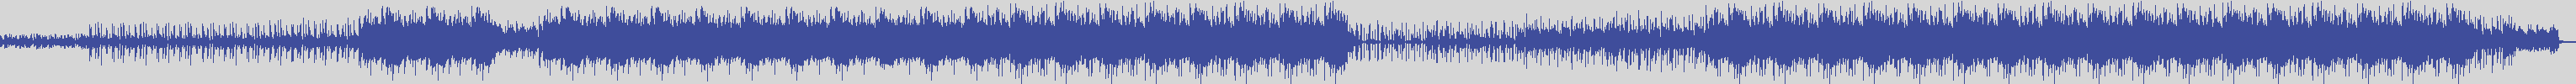 noclouds_chillout [NOC148] Sofa Groove - Persuasione [Original Mix] audio wave form